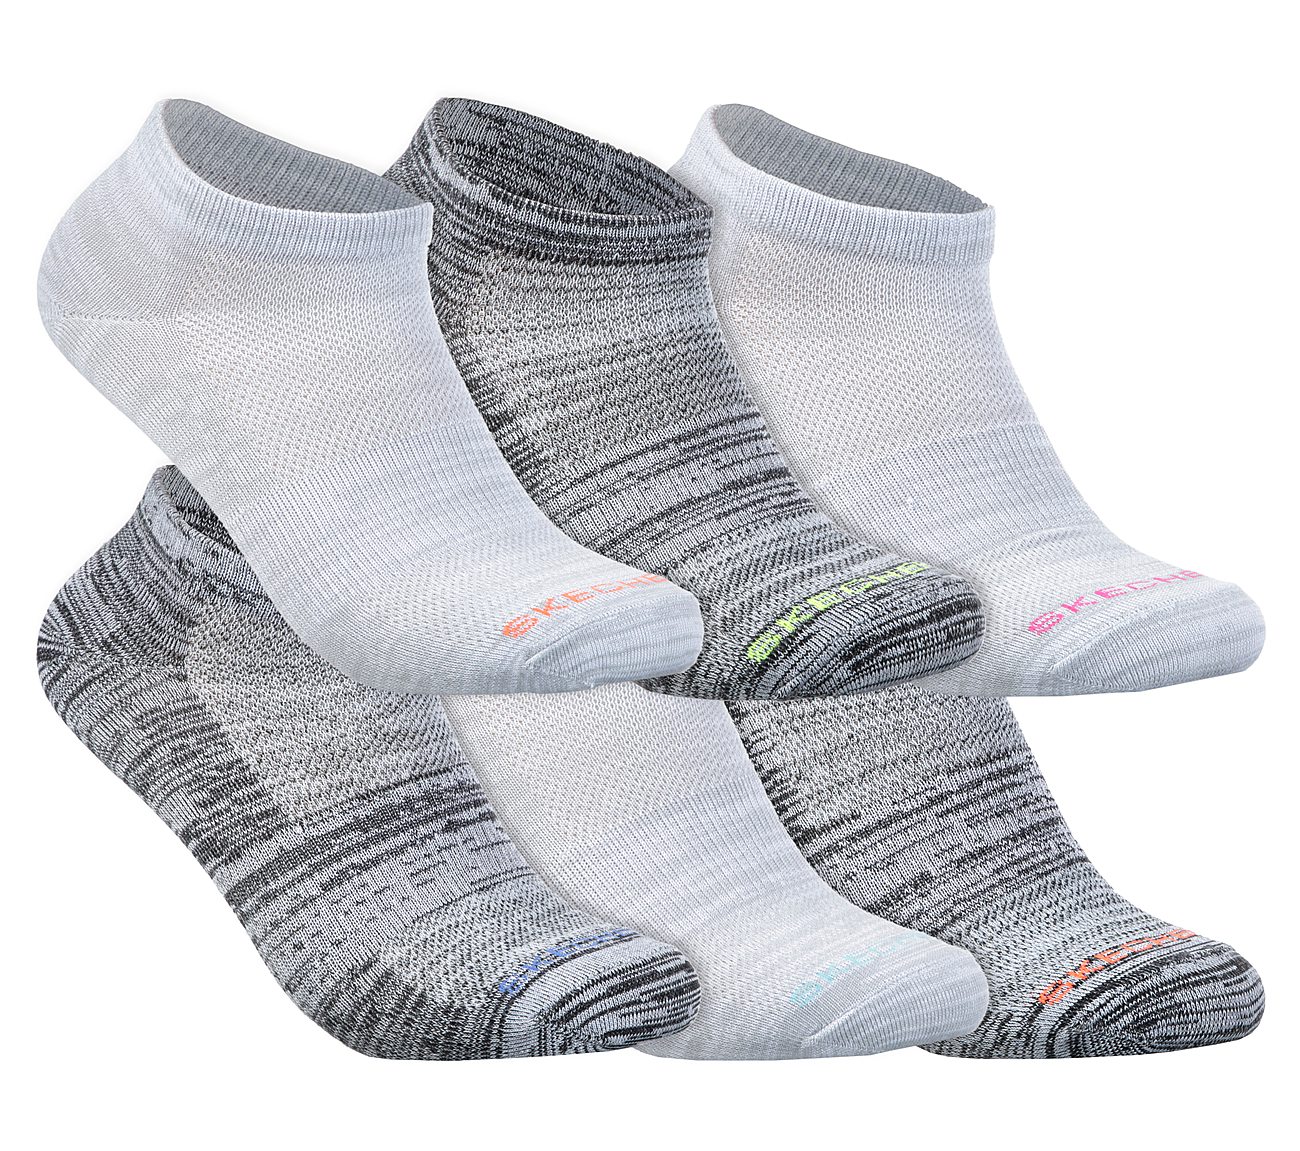 Buy SKECHERS 6 Pack Low Cut Sport Stripe Socks Accessories Shoes